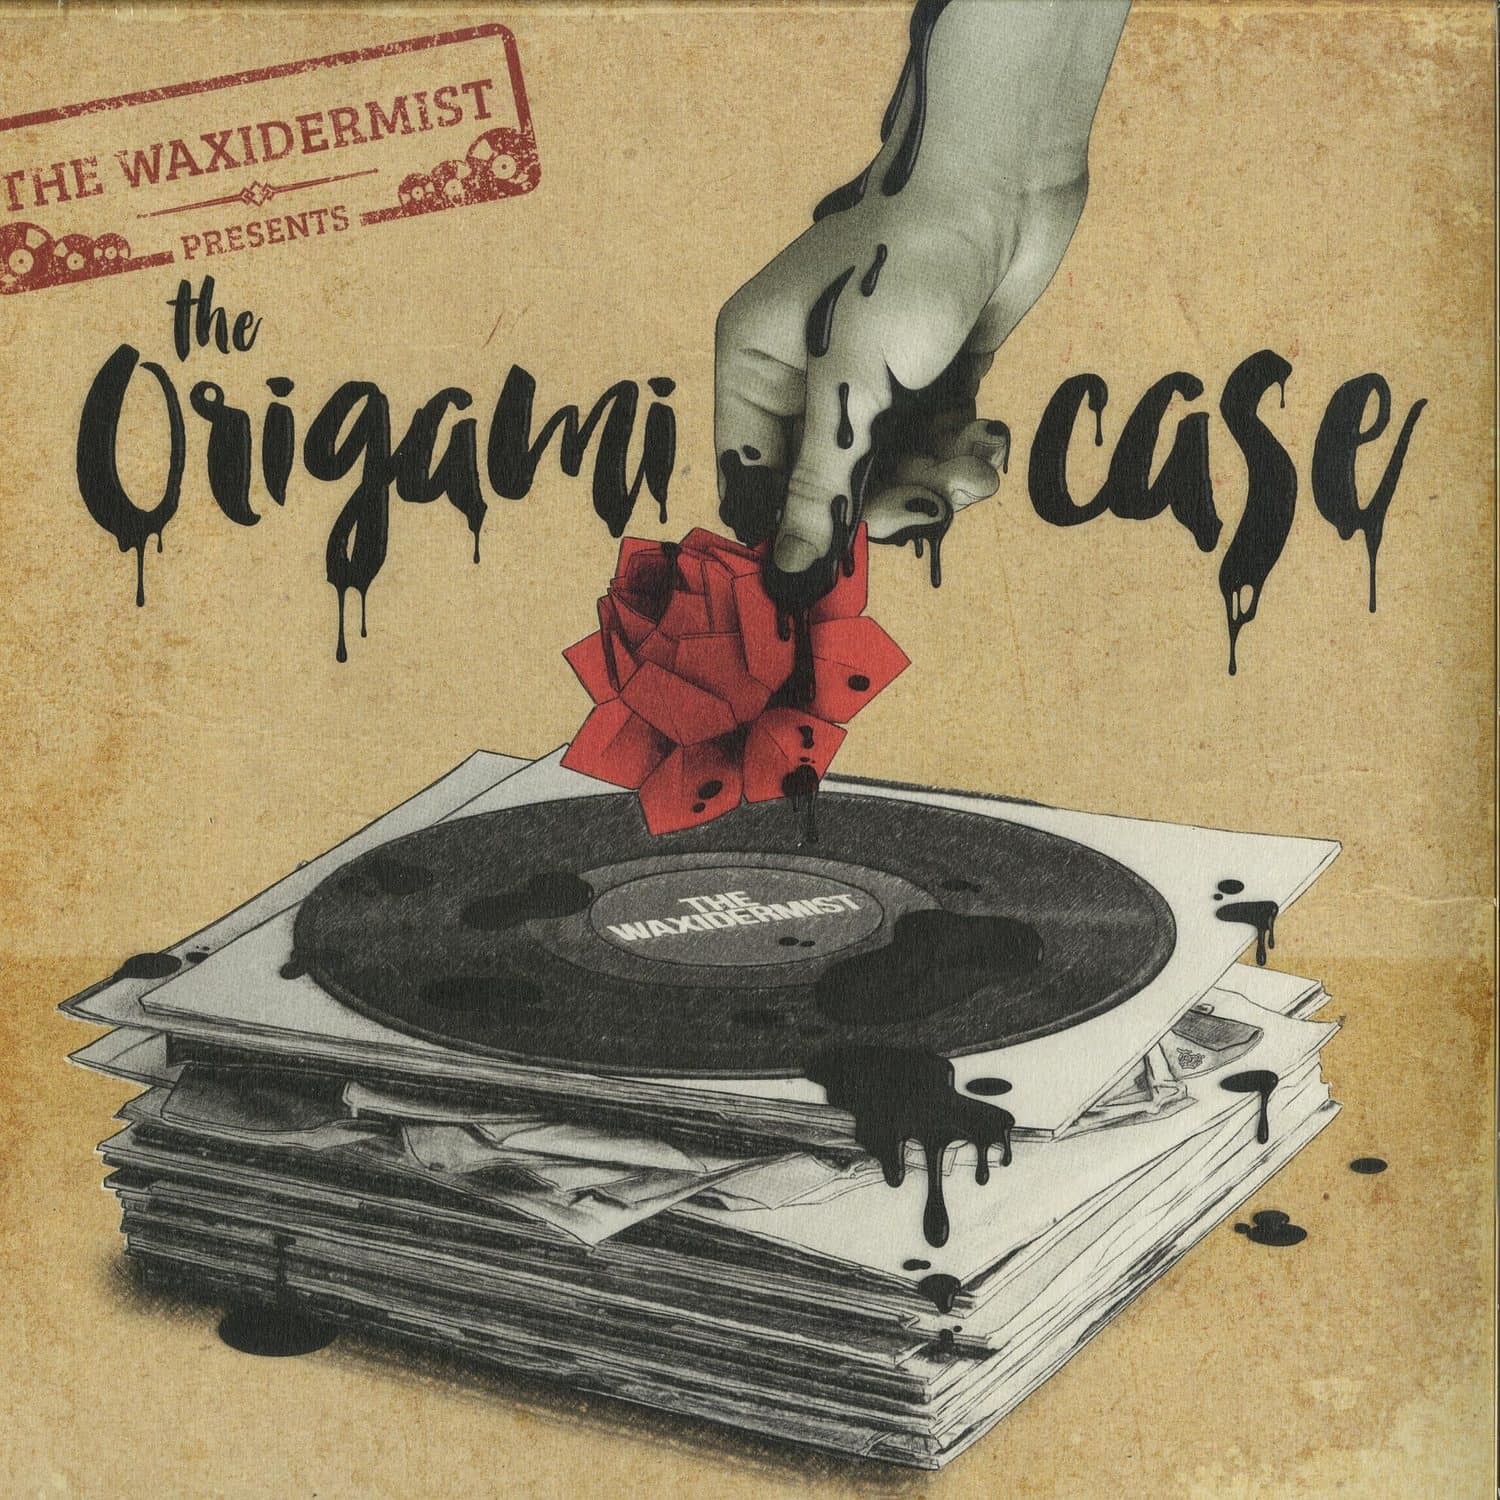 The Waxidermist - THE ORIGAMI CASE 